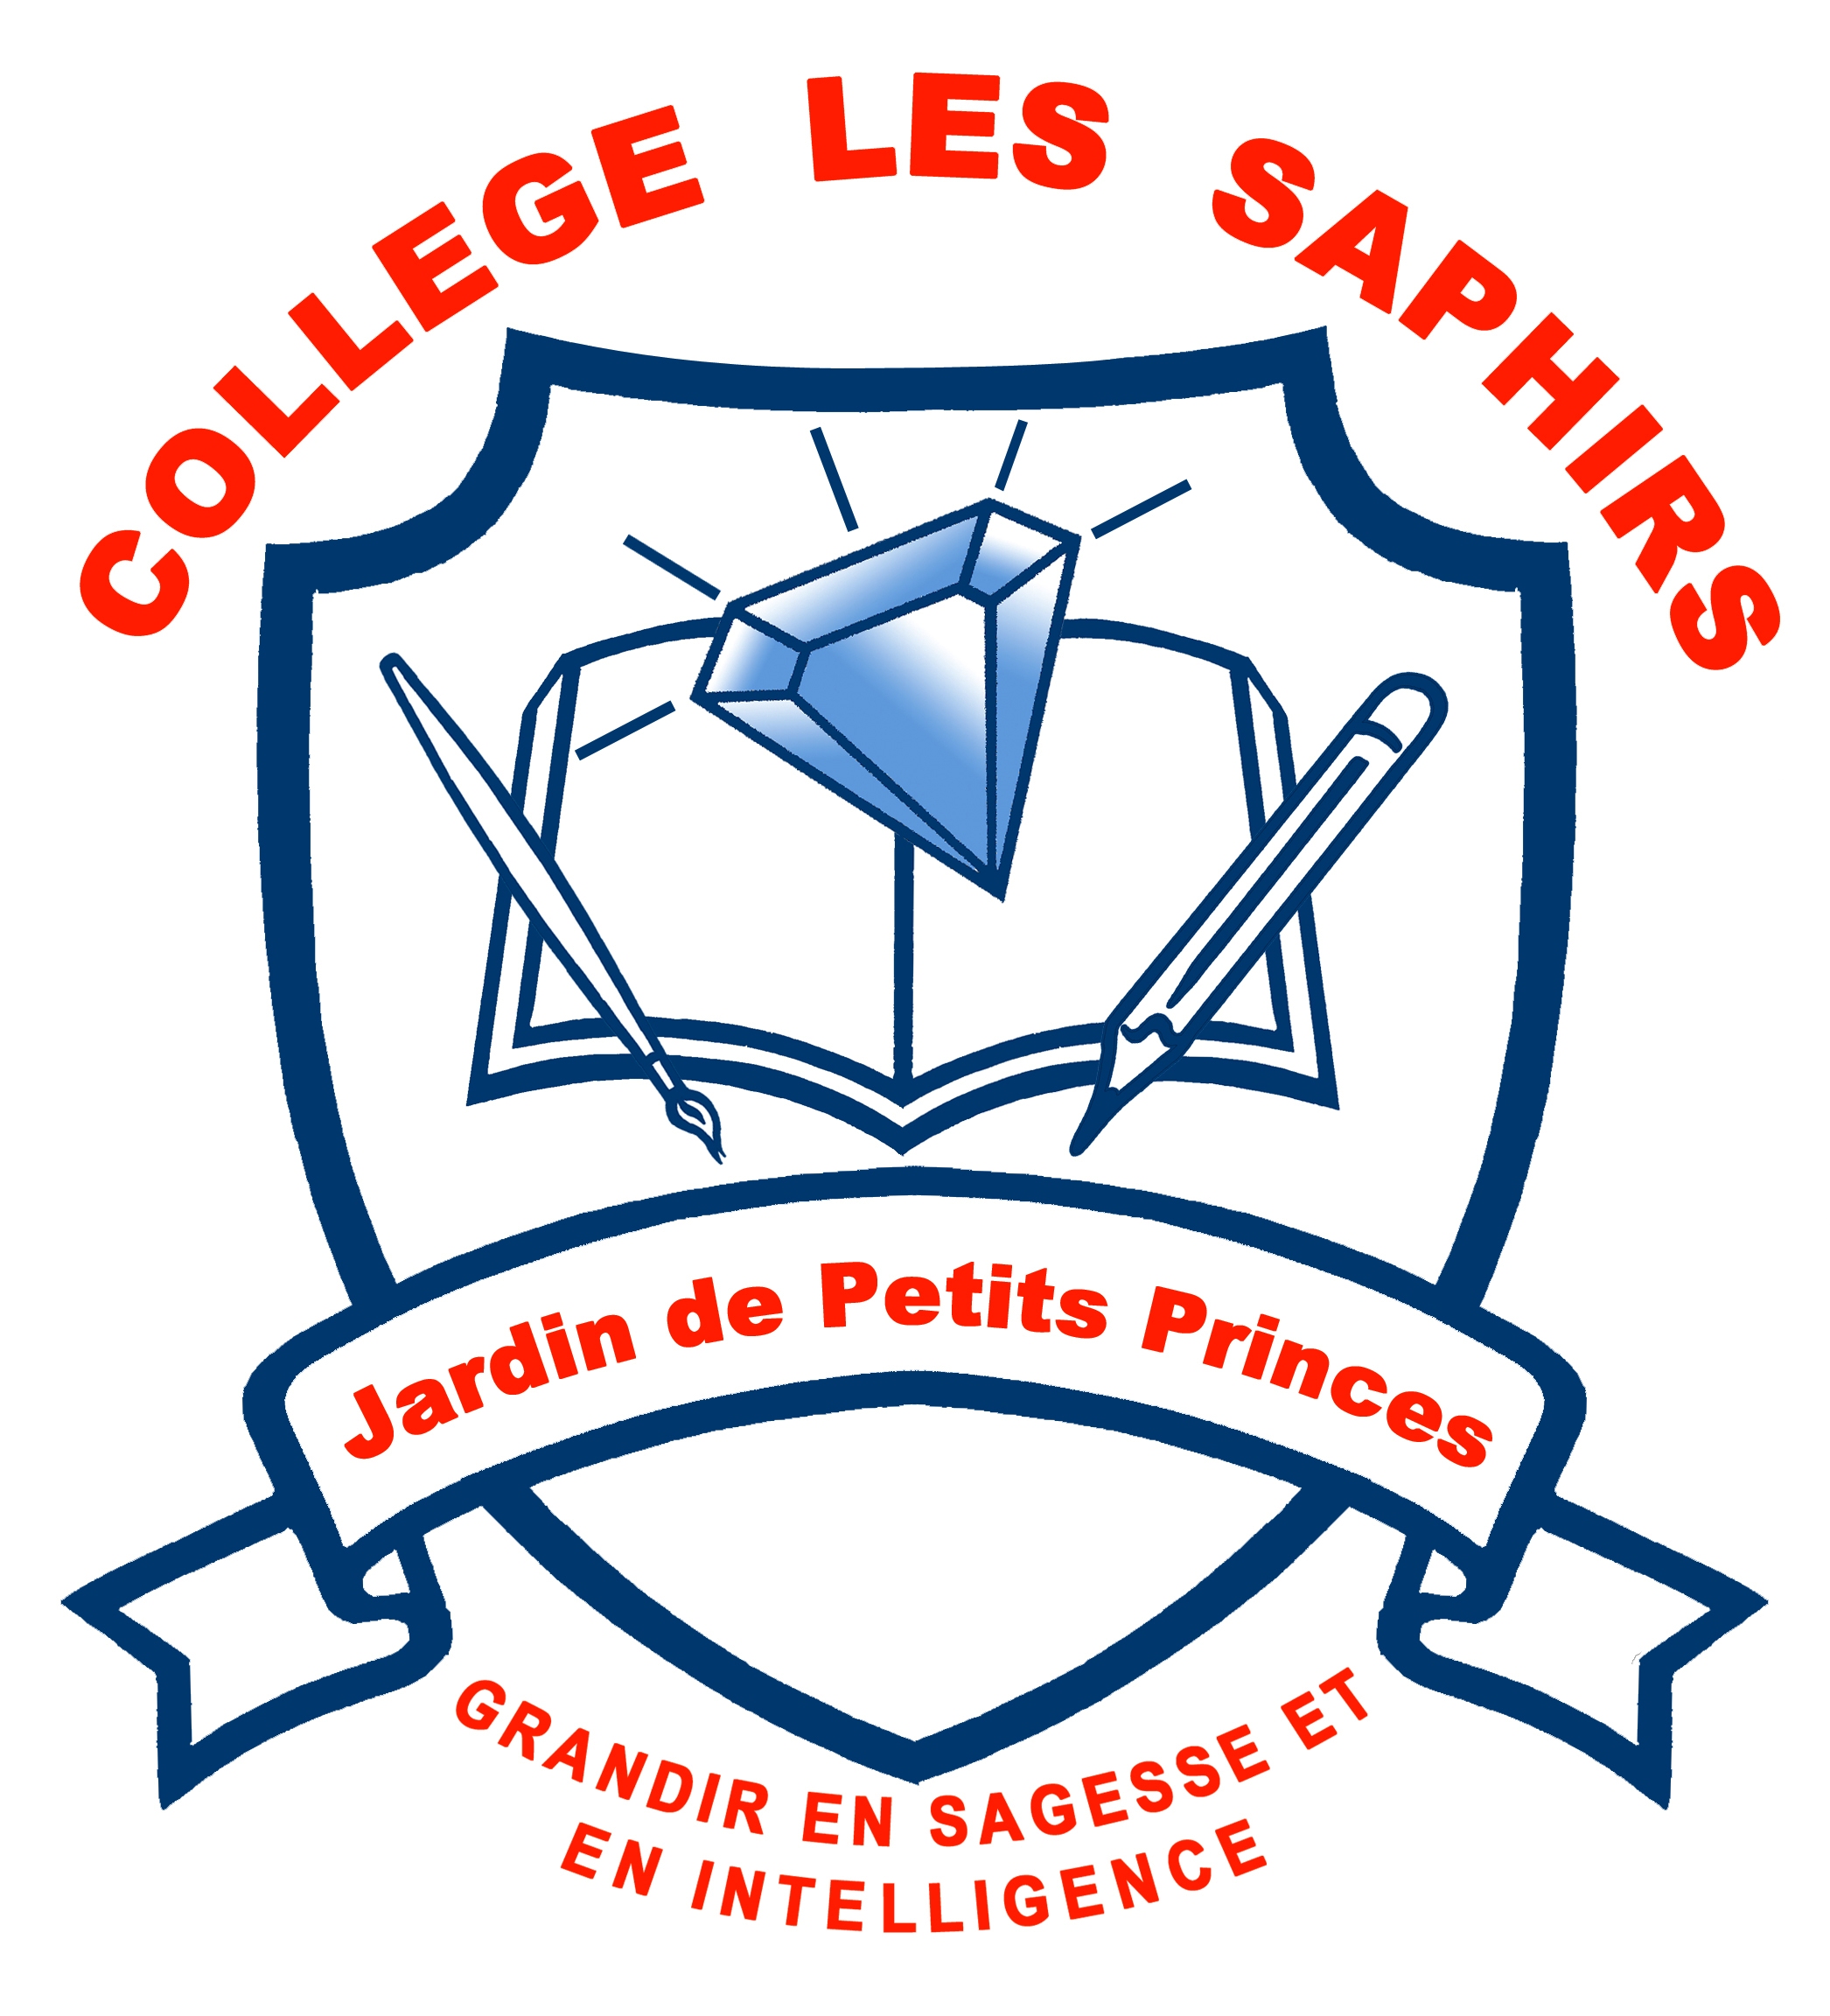 Logo College Les Saphirs